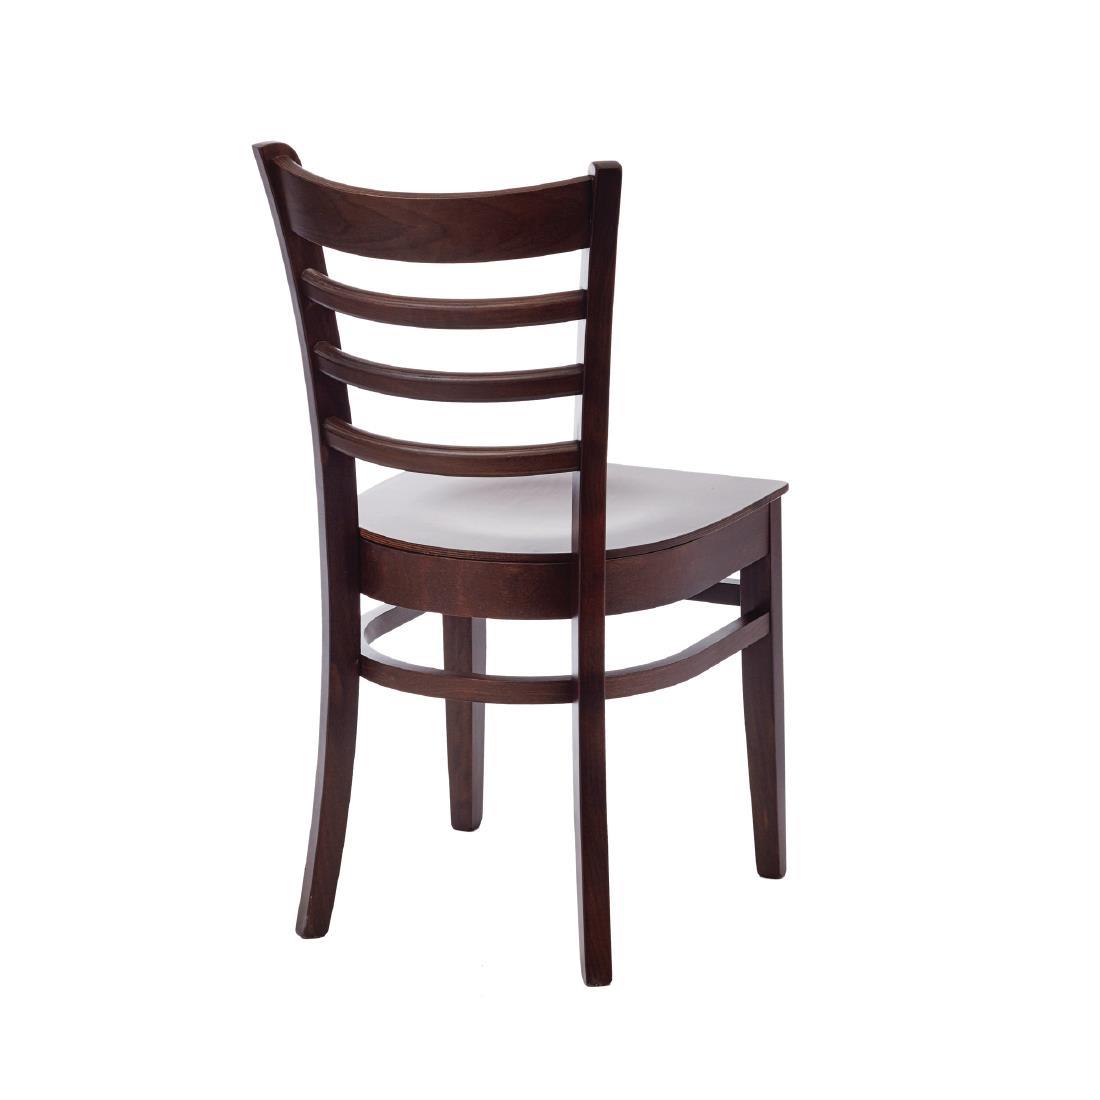 Fameg Slatted Side Chairs Walnut Finish (Pack of 2) - CD186-PL  - 2